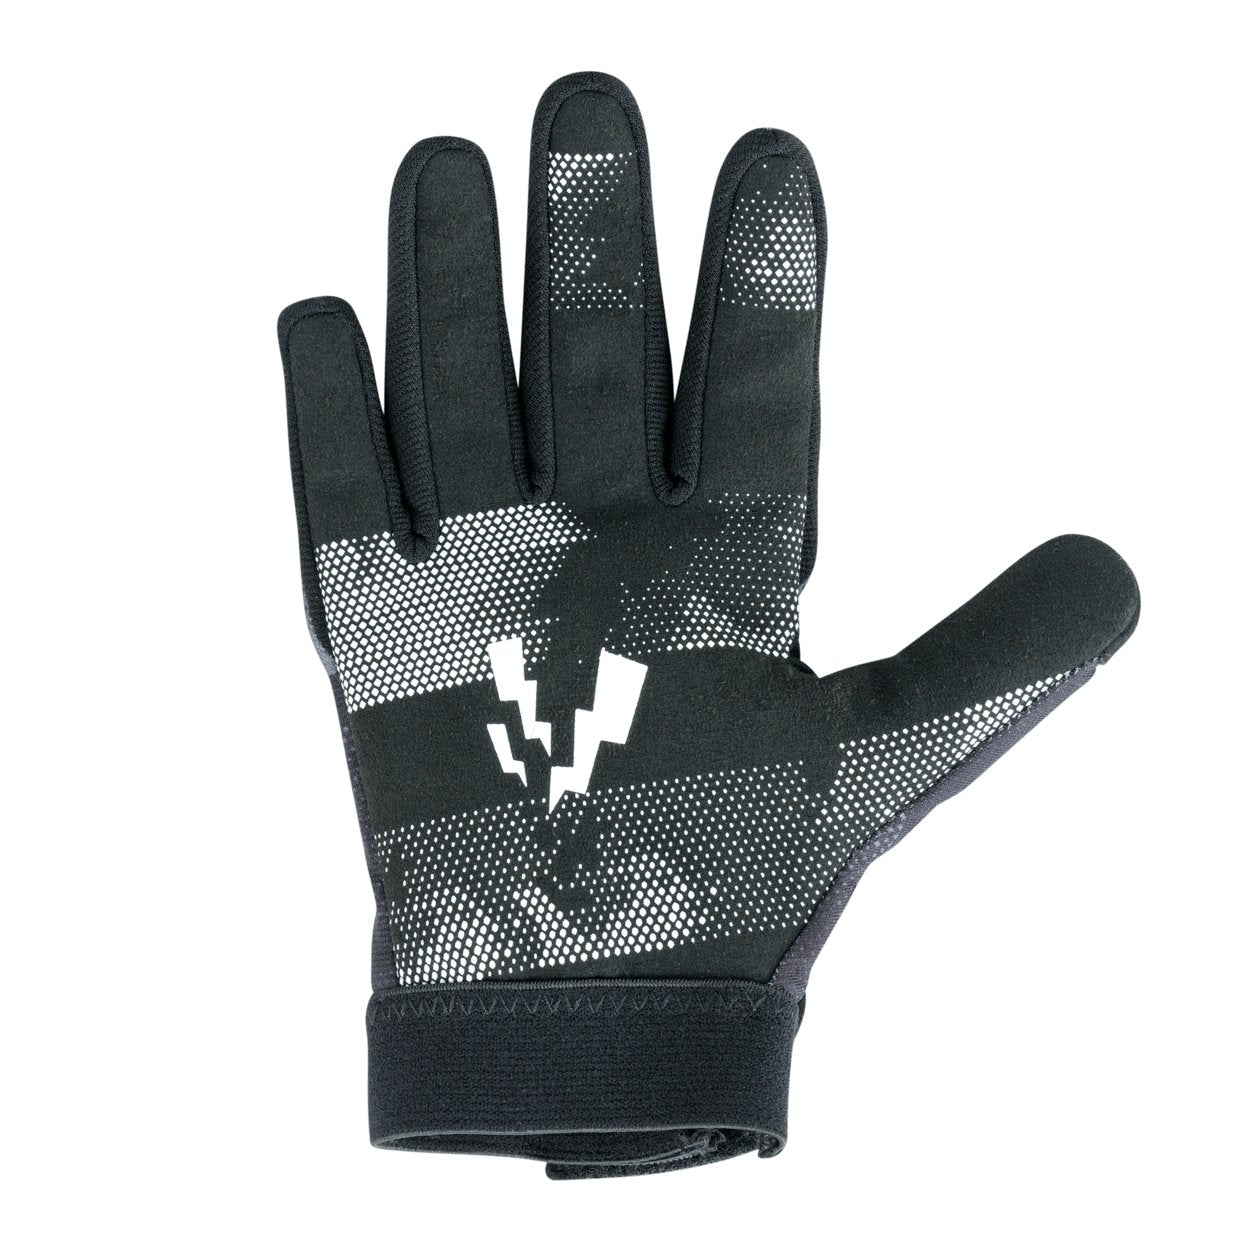 ION Youth MTB Gloves Scrub 2022 - Worthing Watersports - 9008415966042 - Gloves - ION Bike